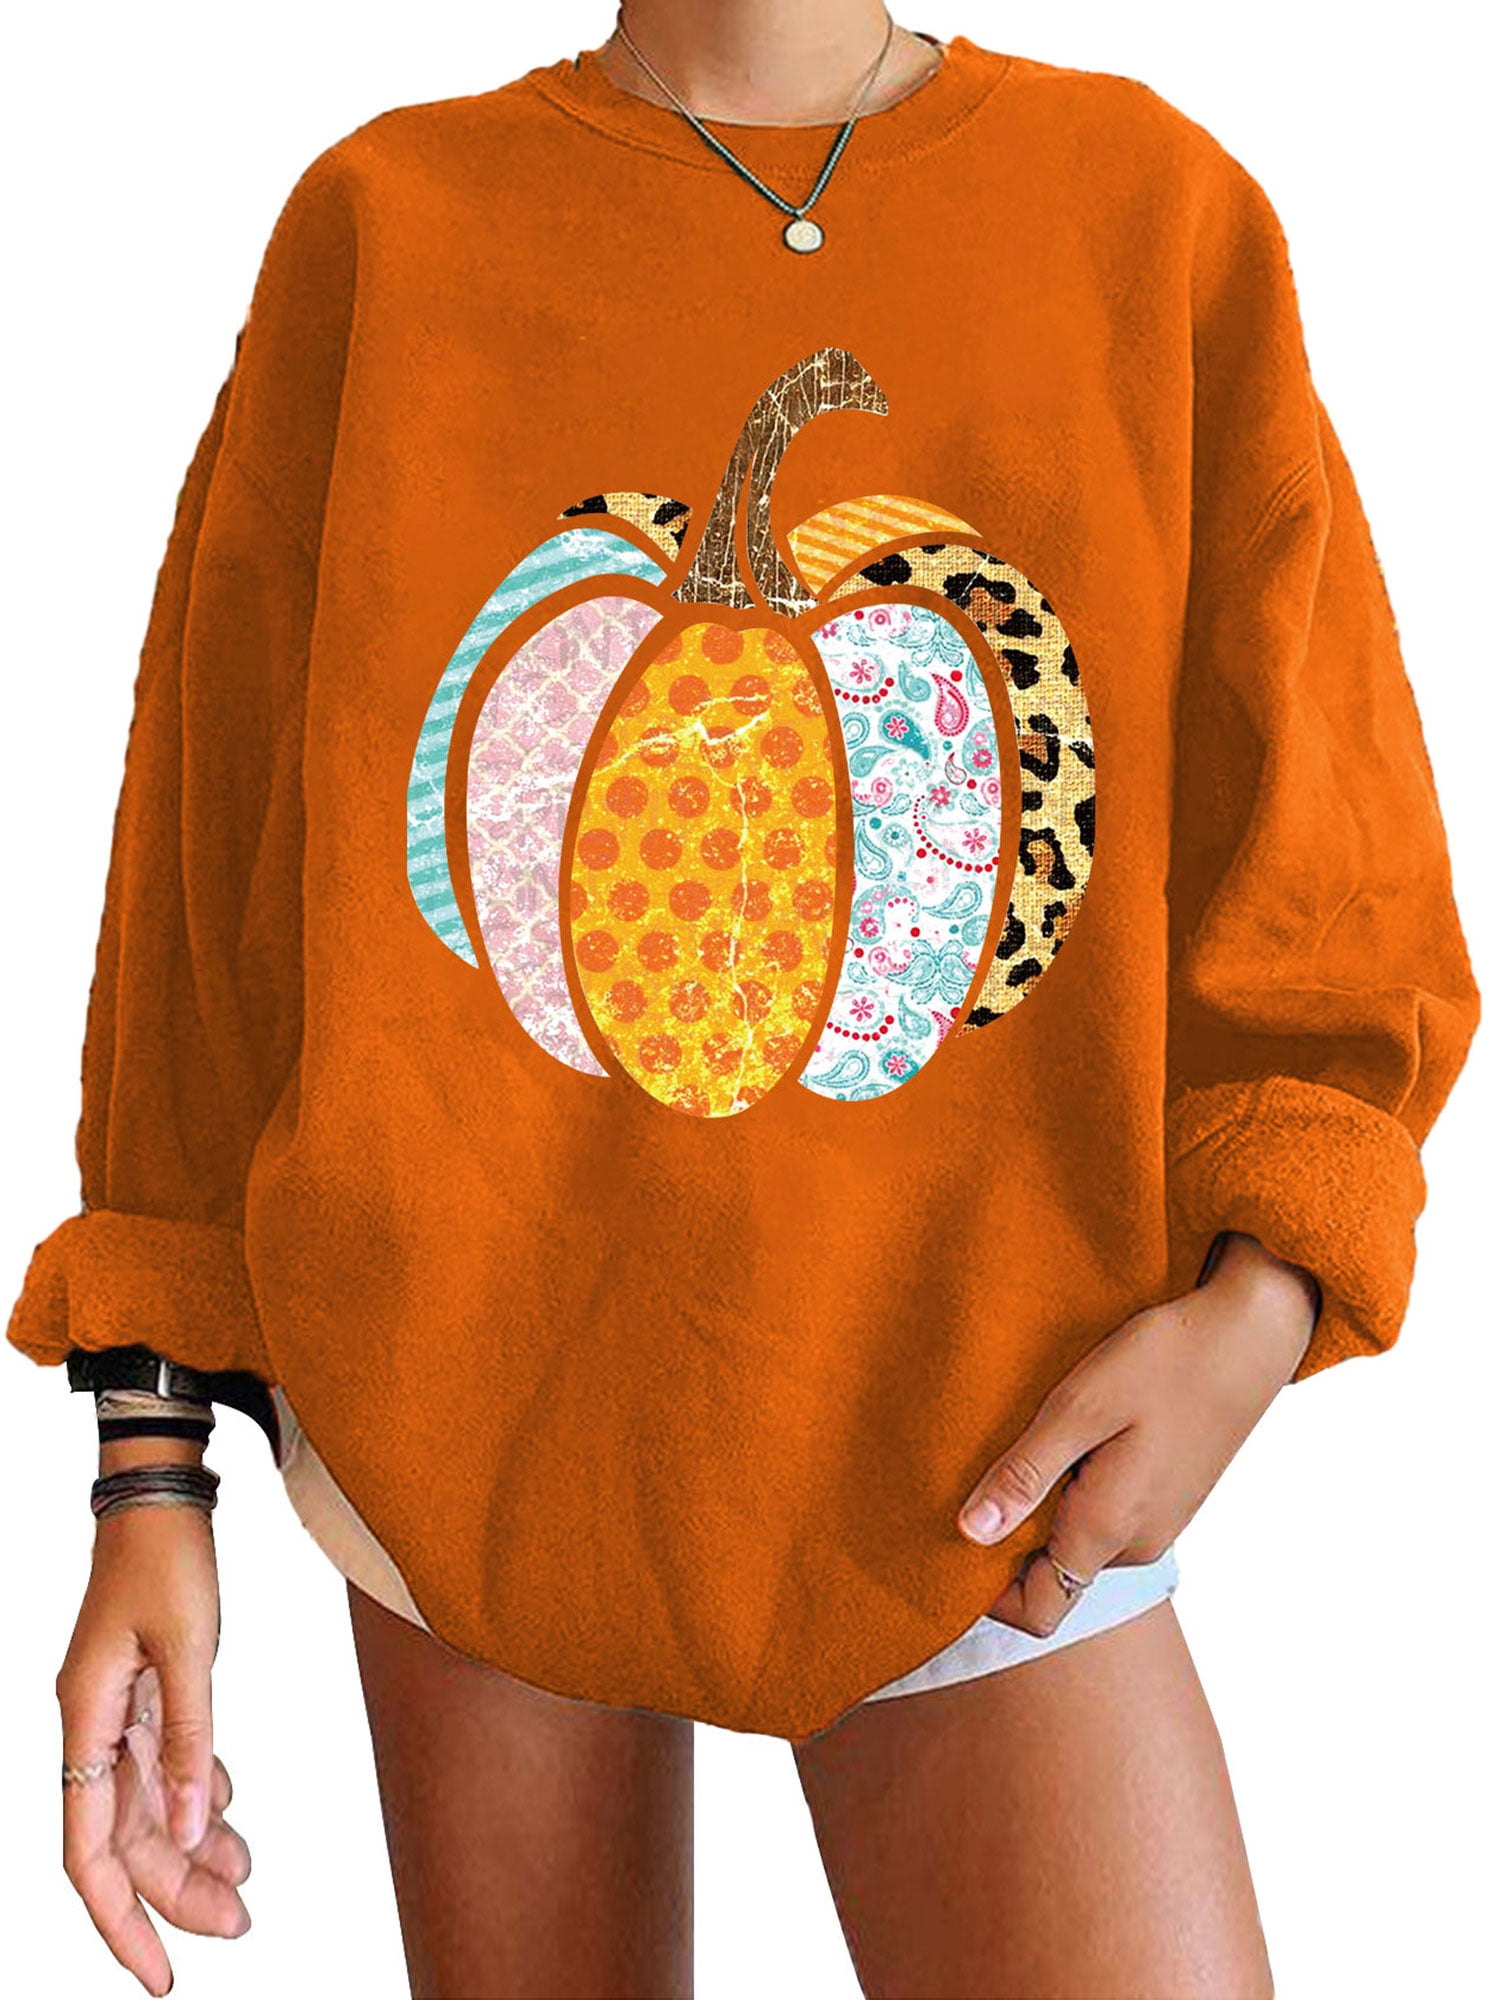  HAICOM Dark Shirt for Women Sweat shirt For Women Stitching  Halloween Vacation Casual sweater Shirt Orange : Sports & Outdoors